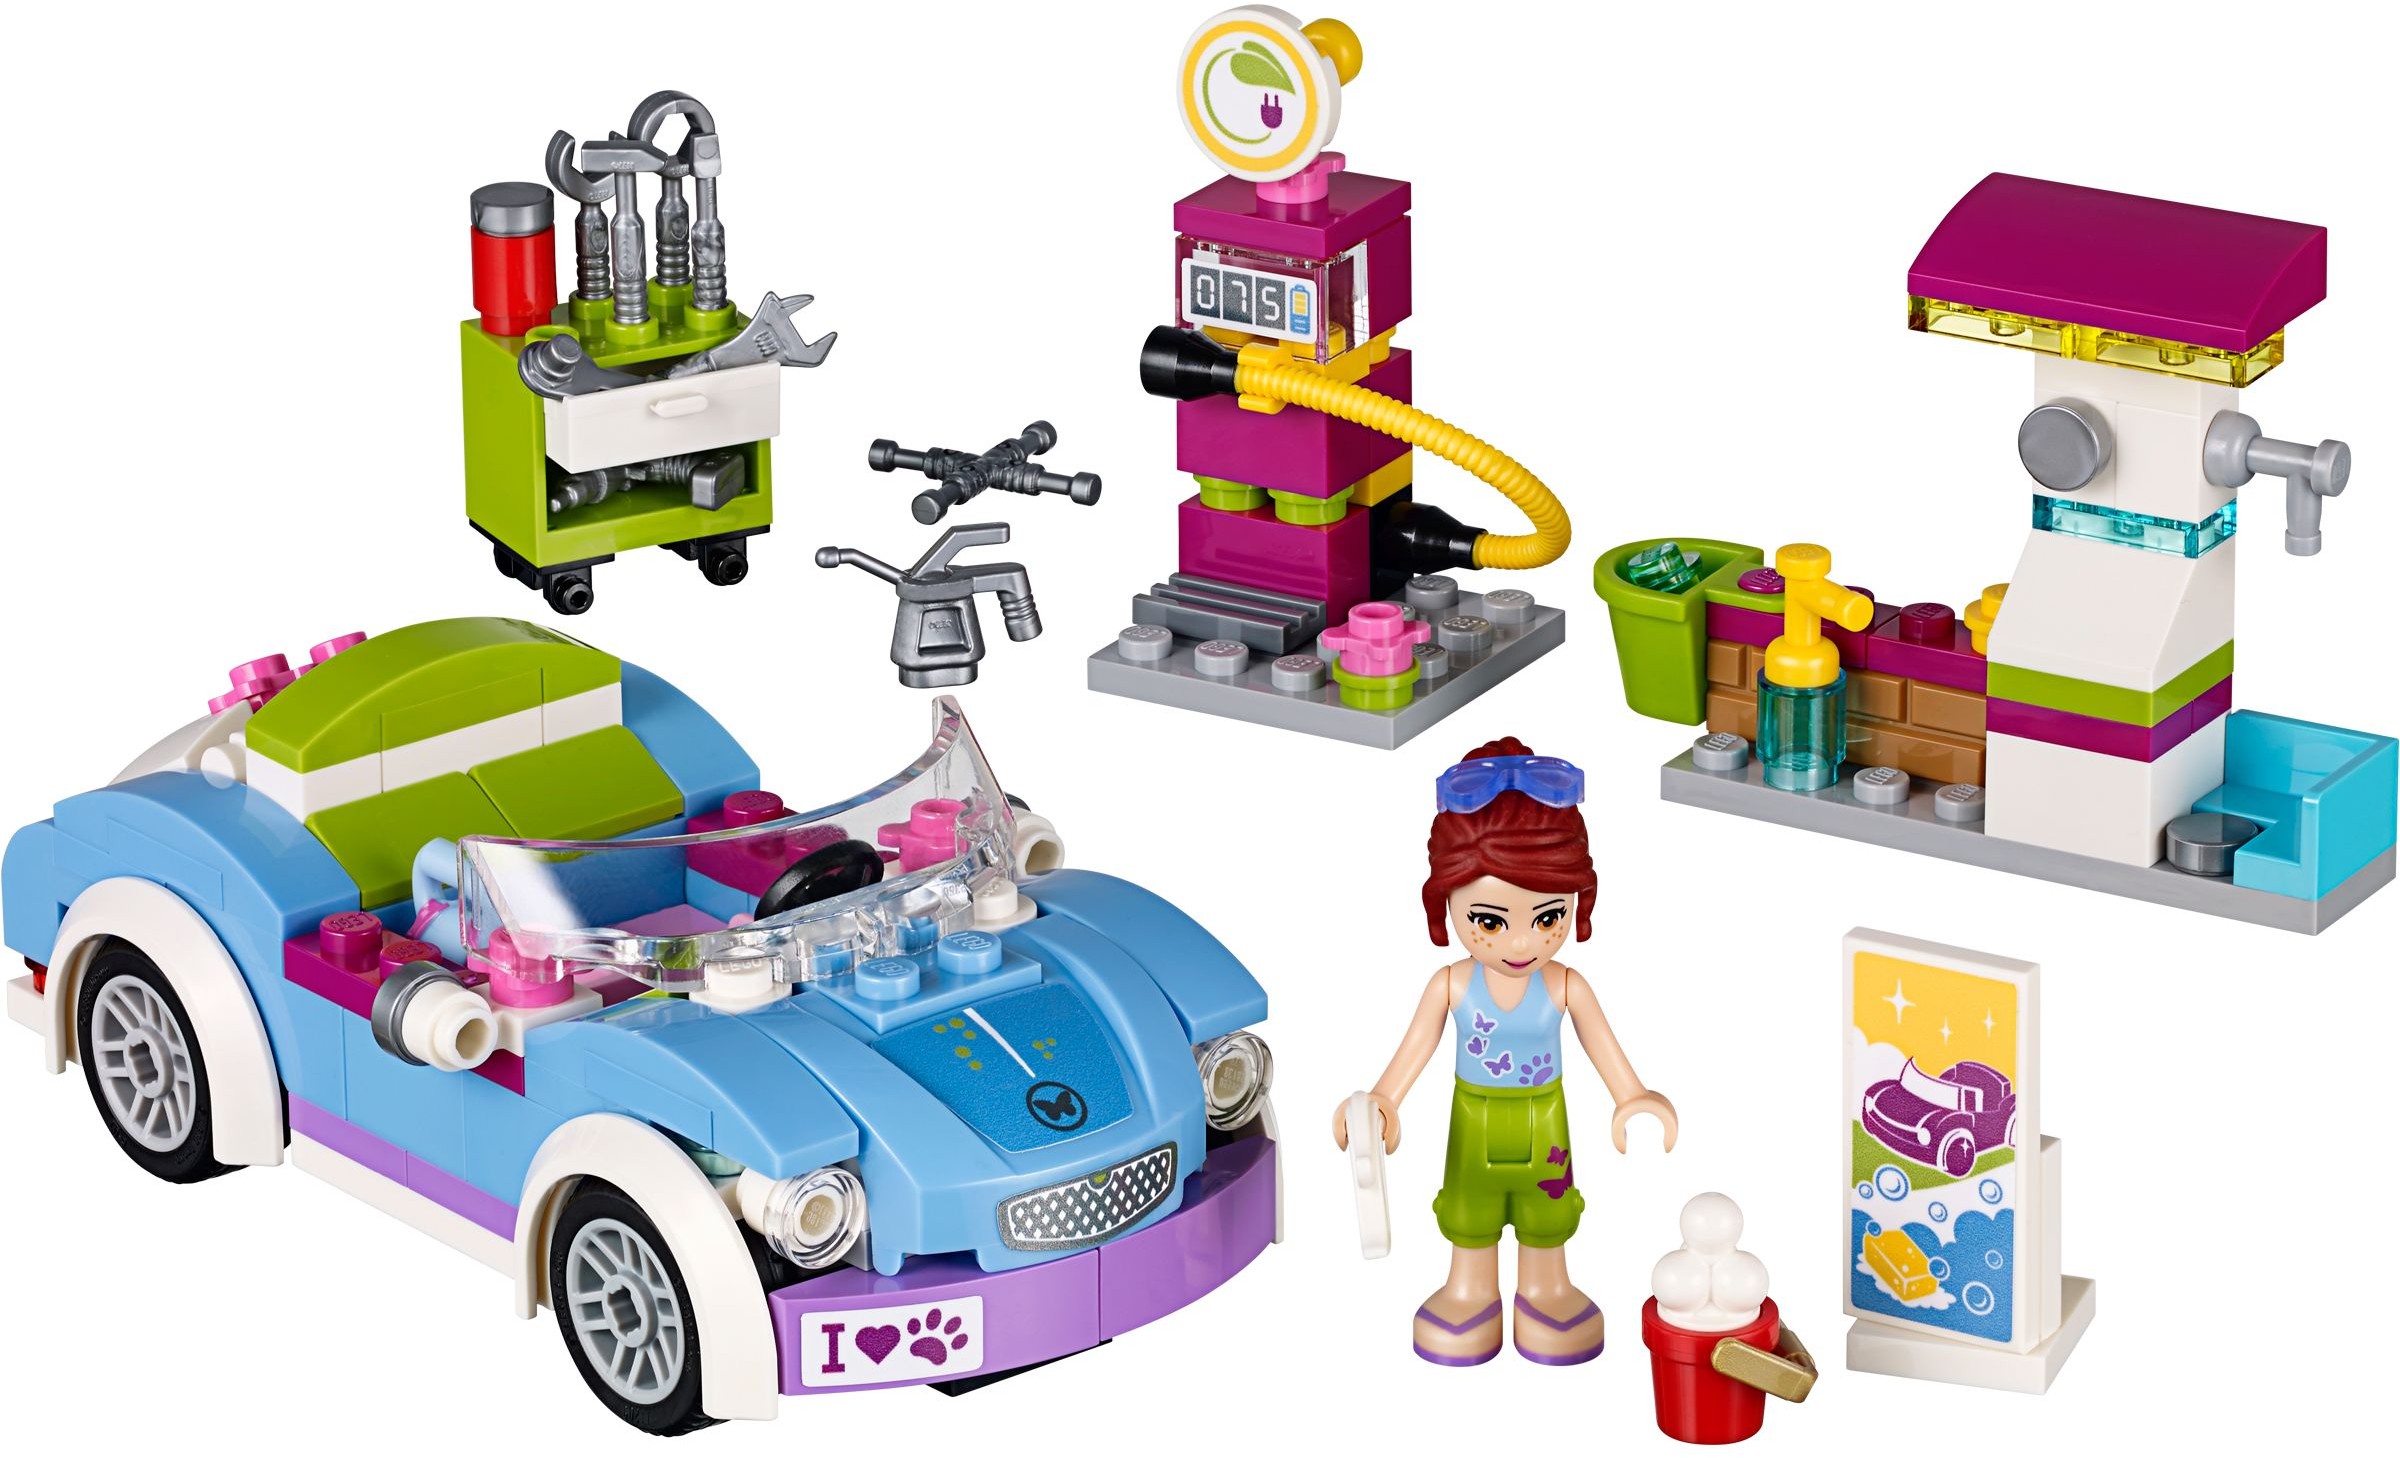 Lego Friends Roadsterul Miei 6-12 Ani (41091)